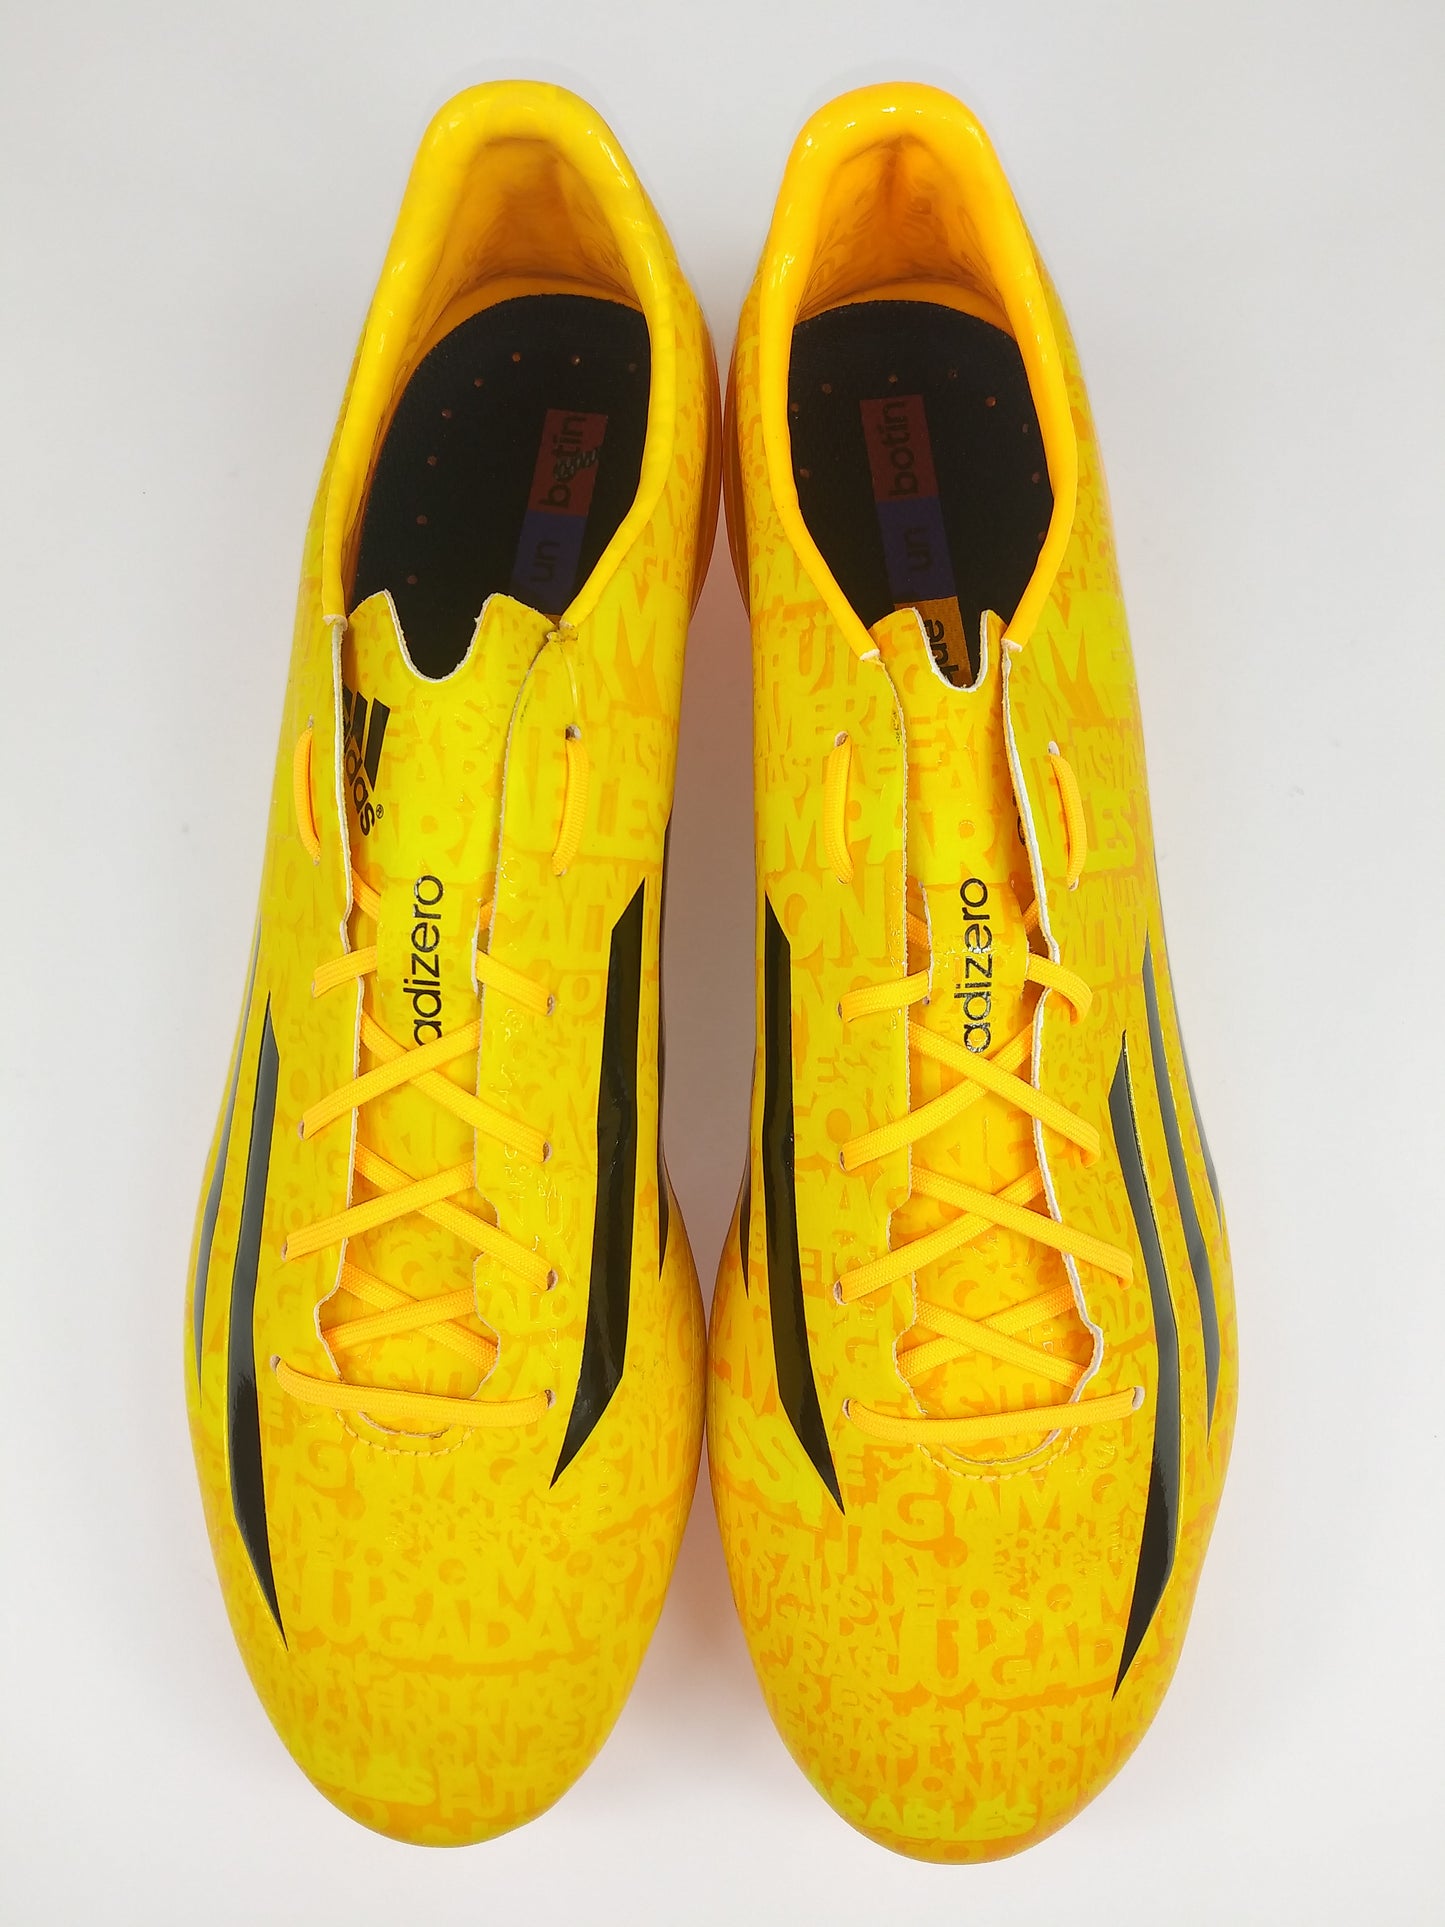 Adidas F50 adizero FG Messi Yellow Black